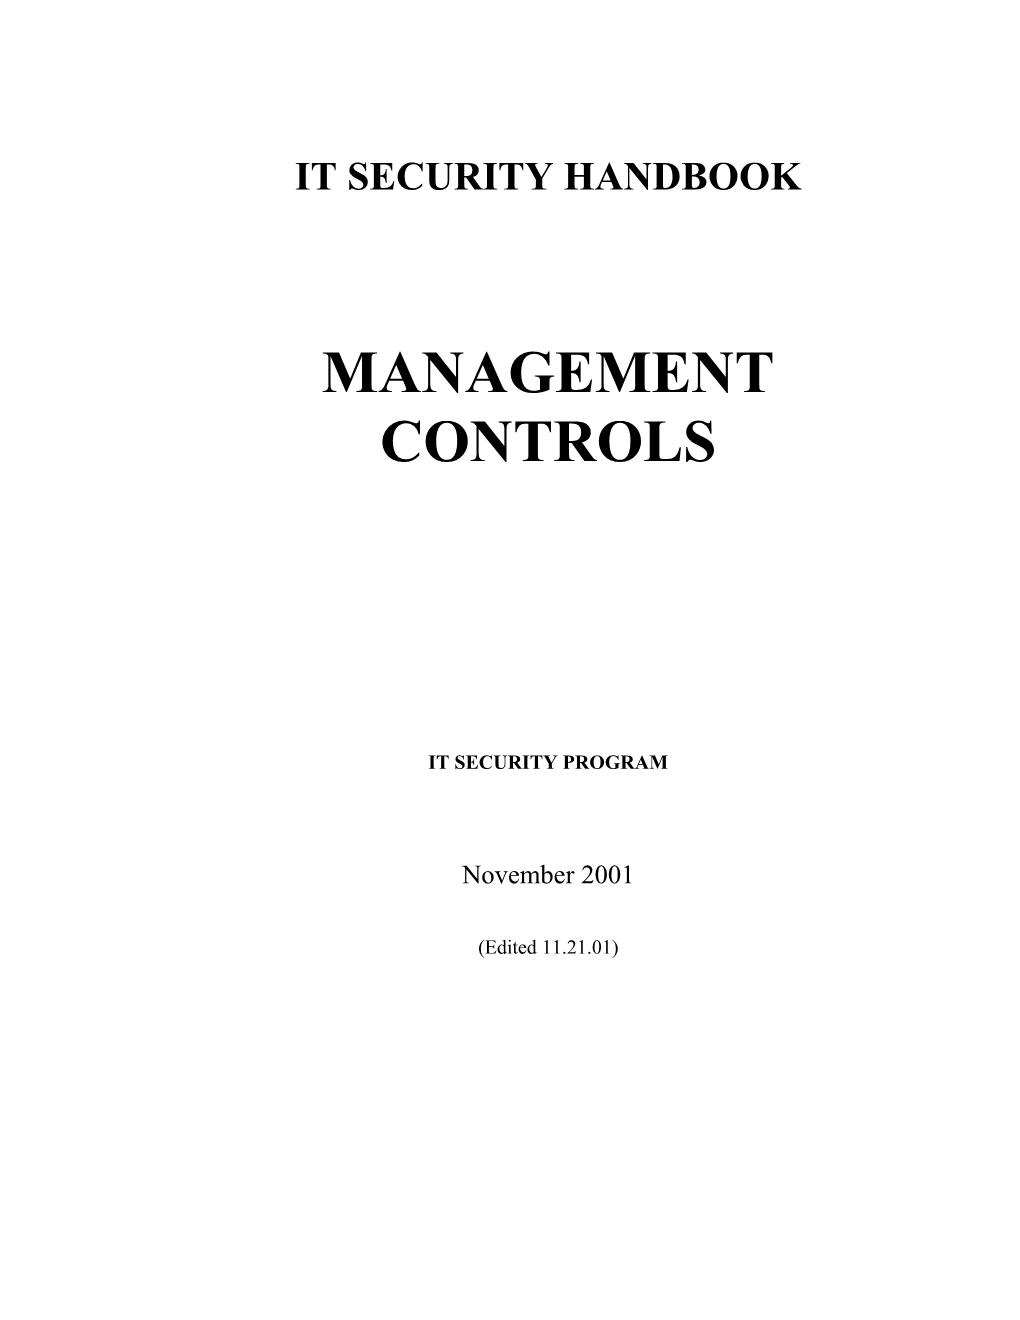 It Security Handbook